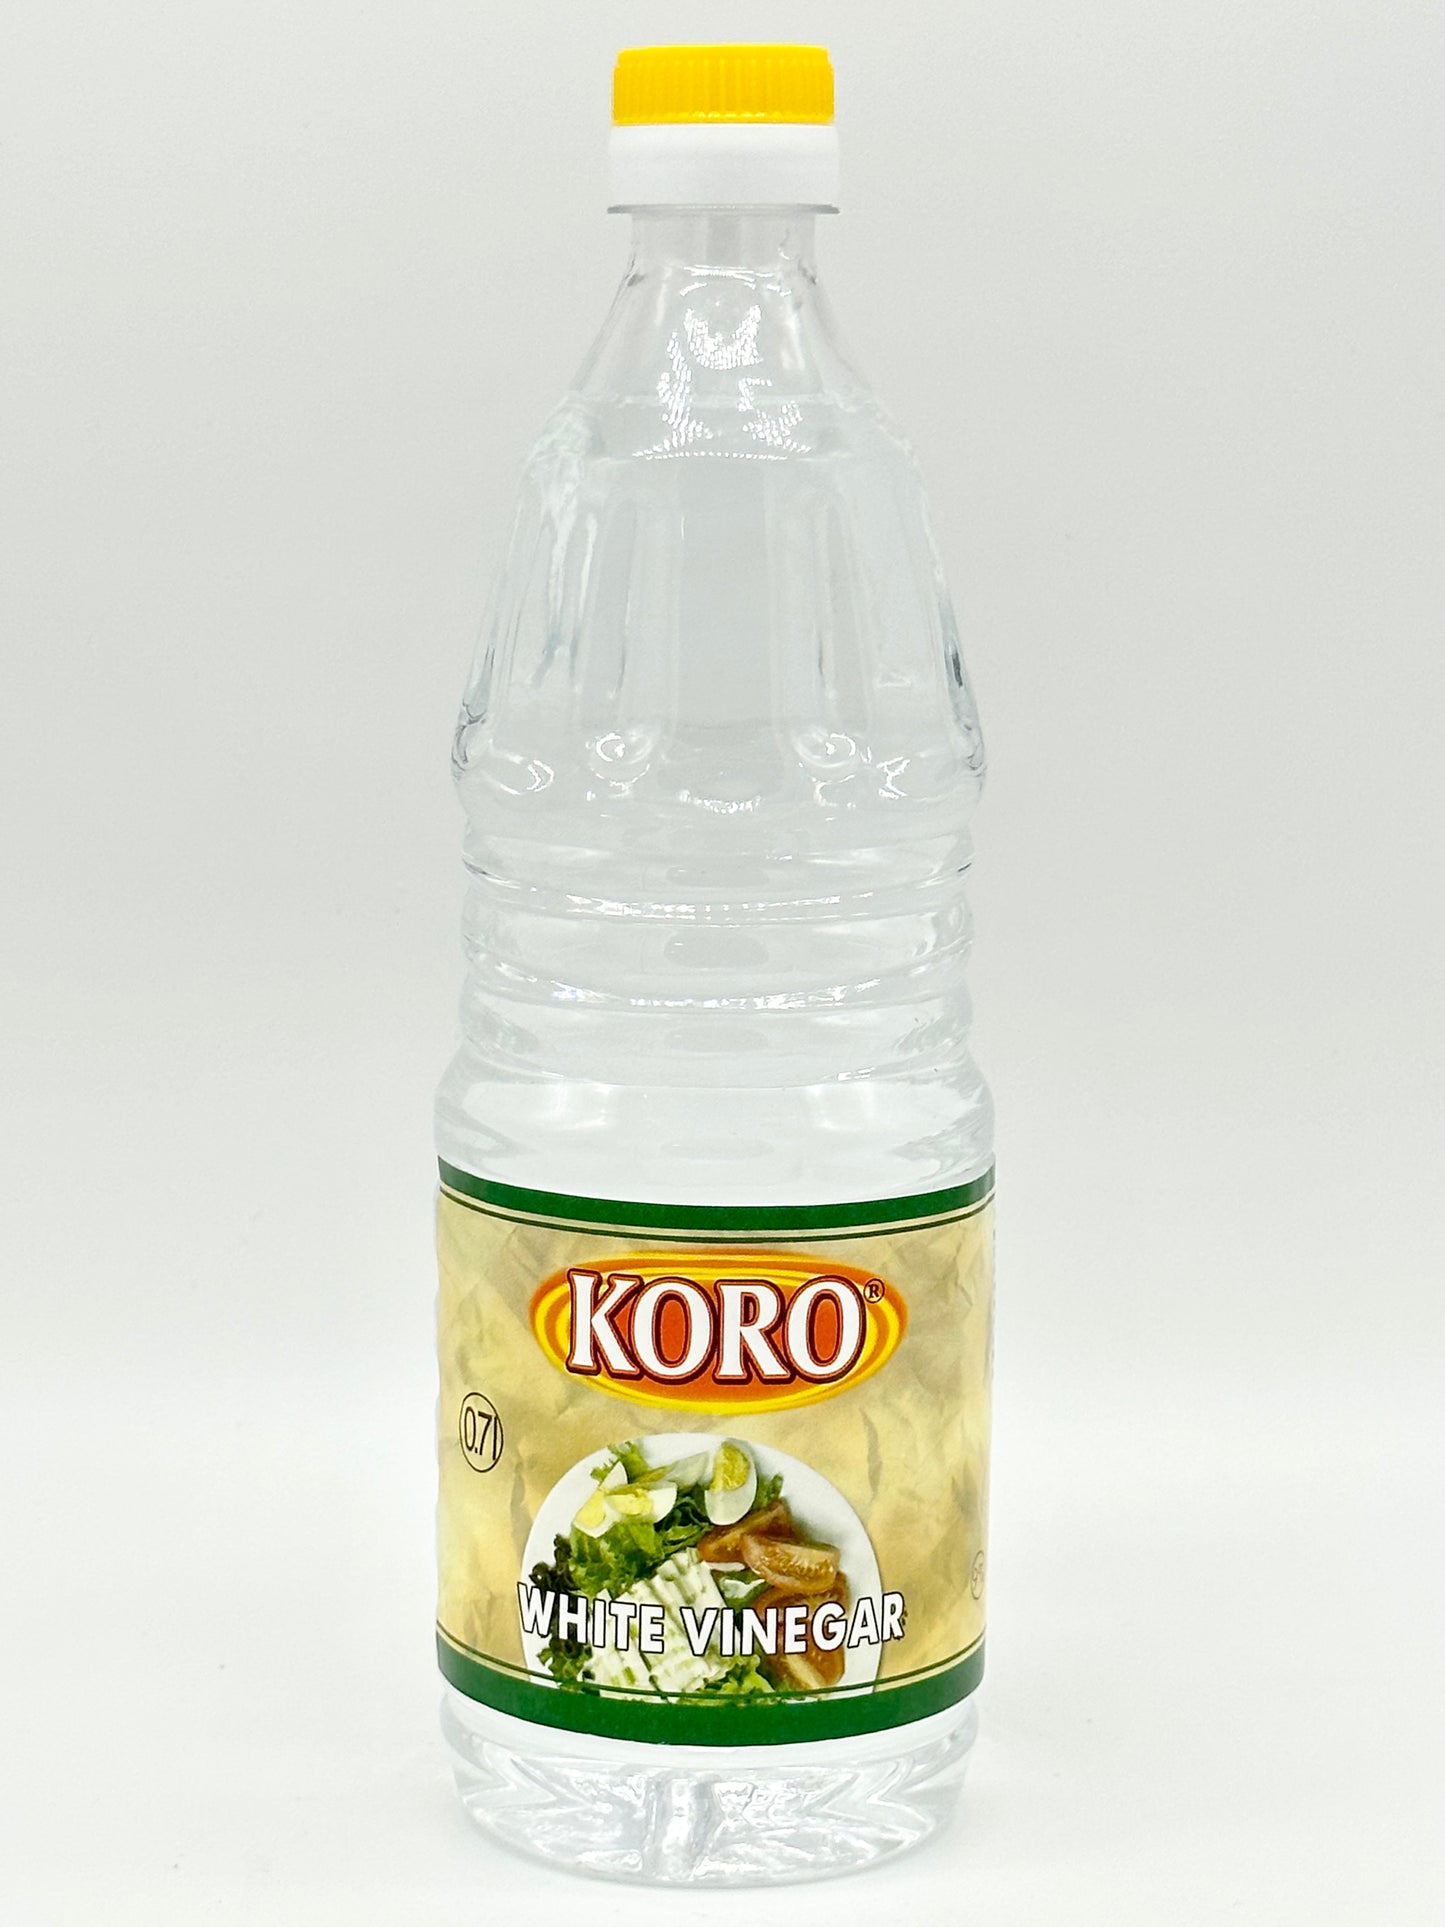 Koro White Vinegar